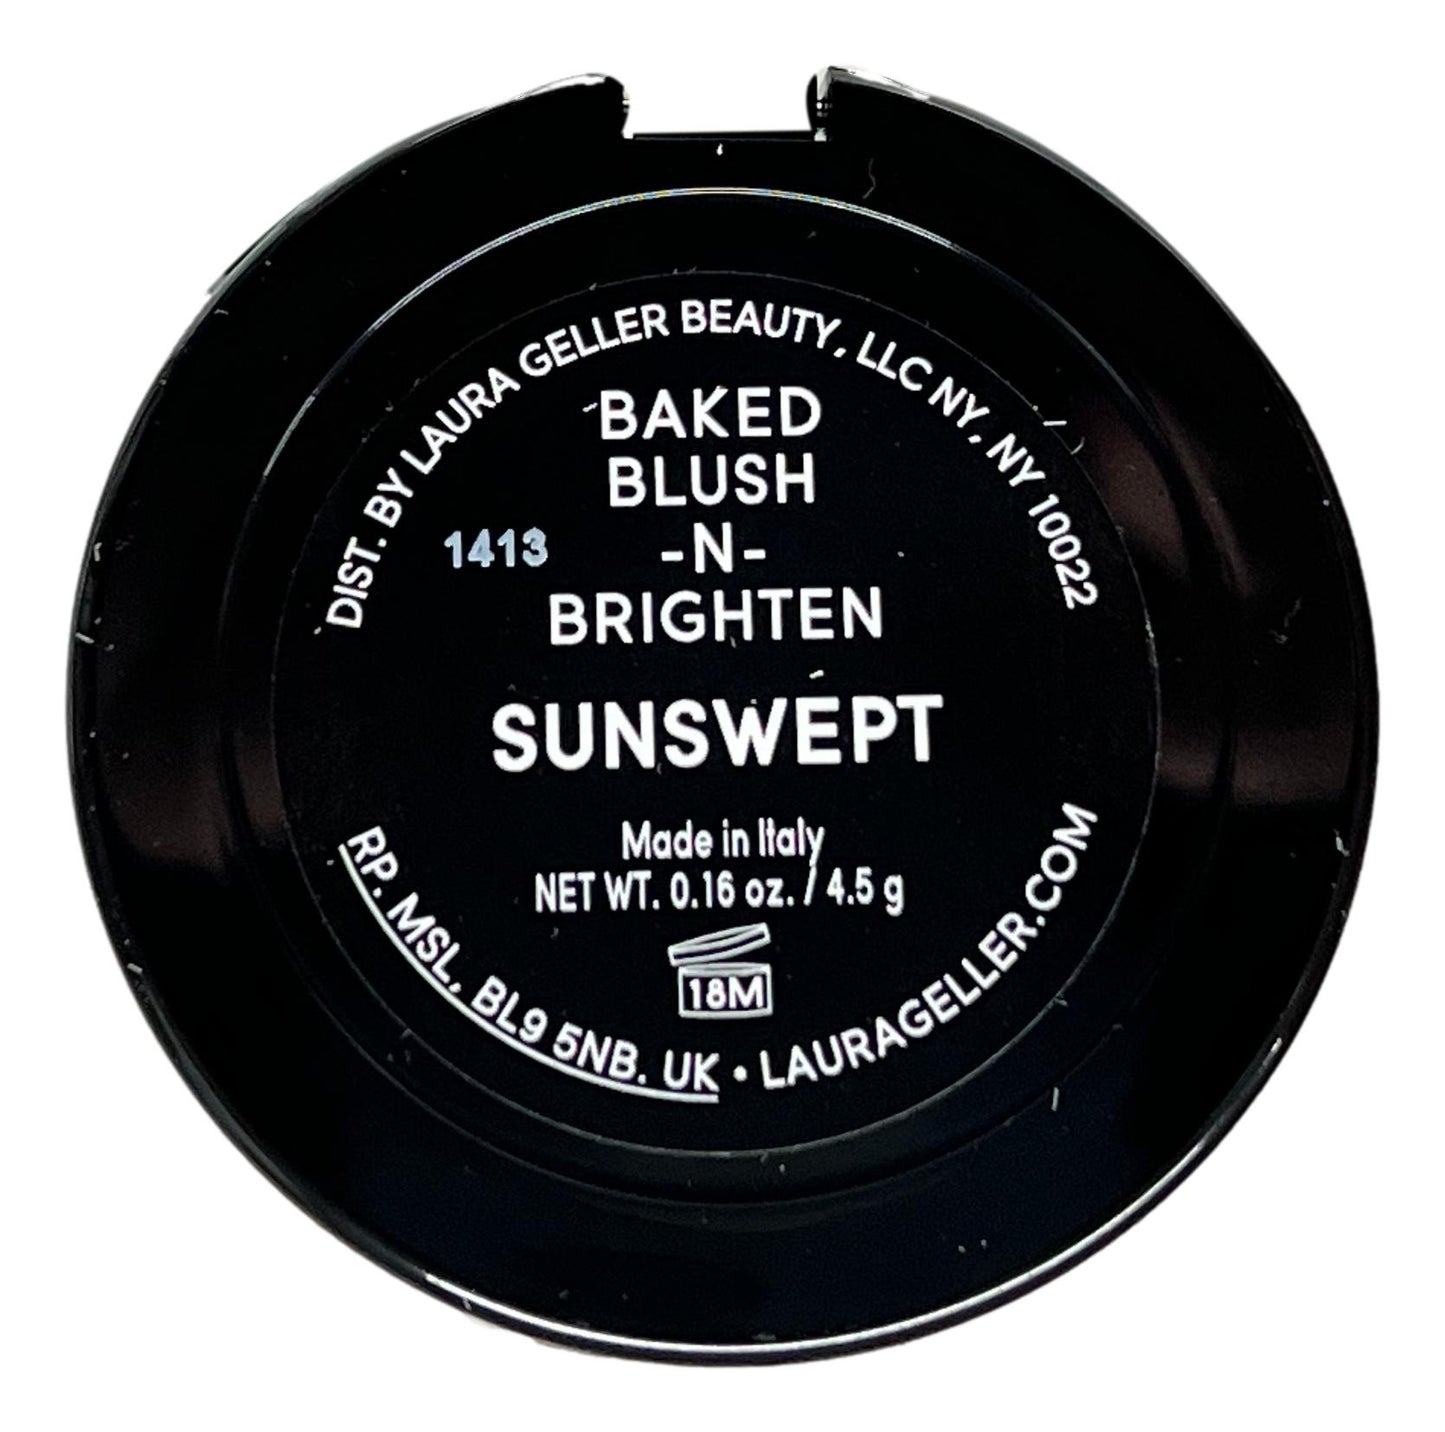 LAURA GELLER NEW YORK Baked Blush-N-Brighten Marbleized Blush- SUNSWEPT